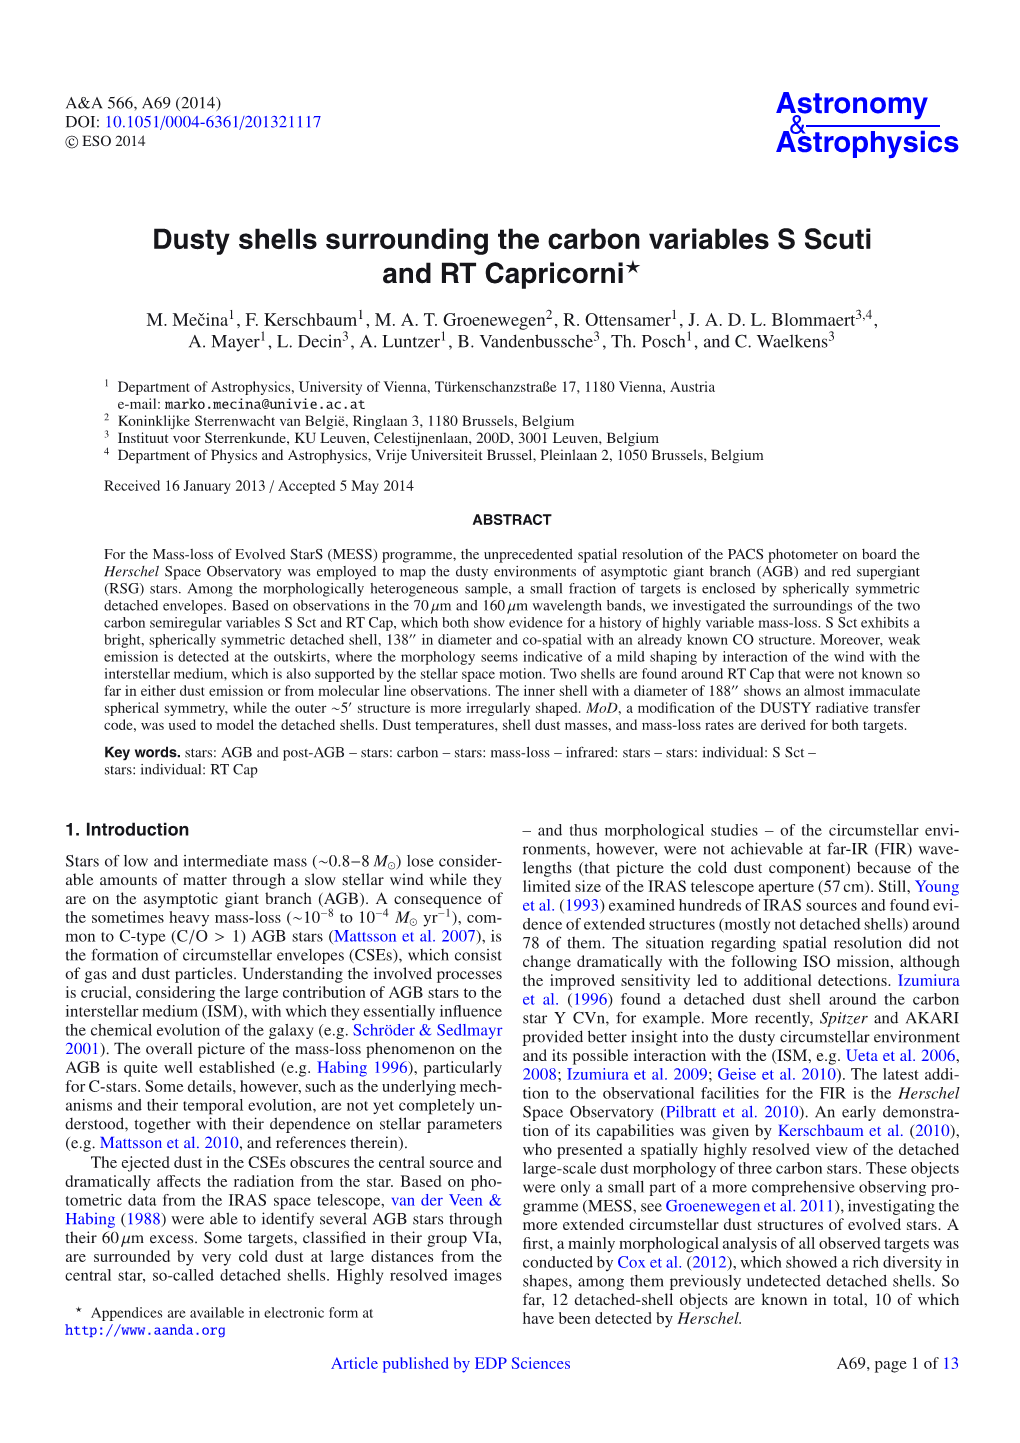 Dusty Shells Surrounding the Carbon Variables S Scuti and RT Capricorni⋆